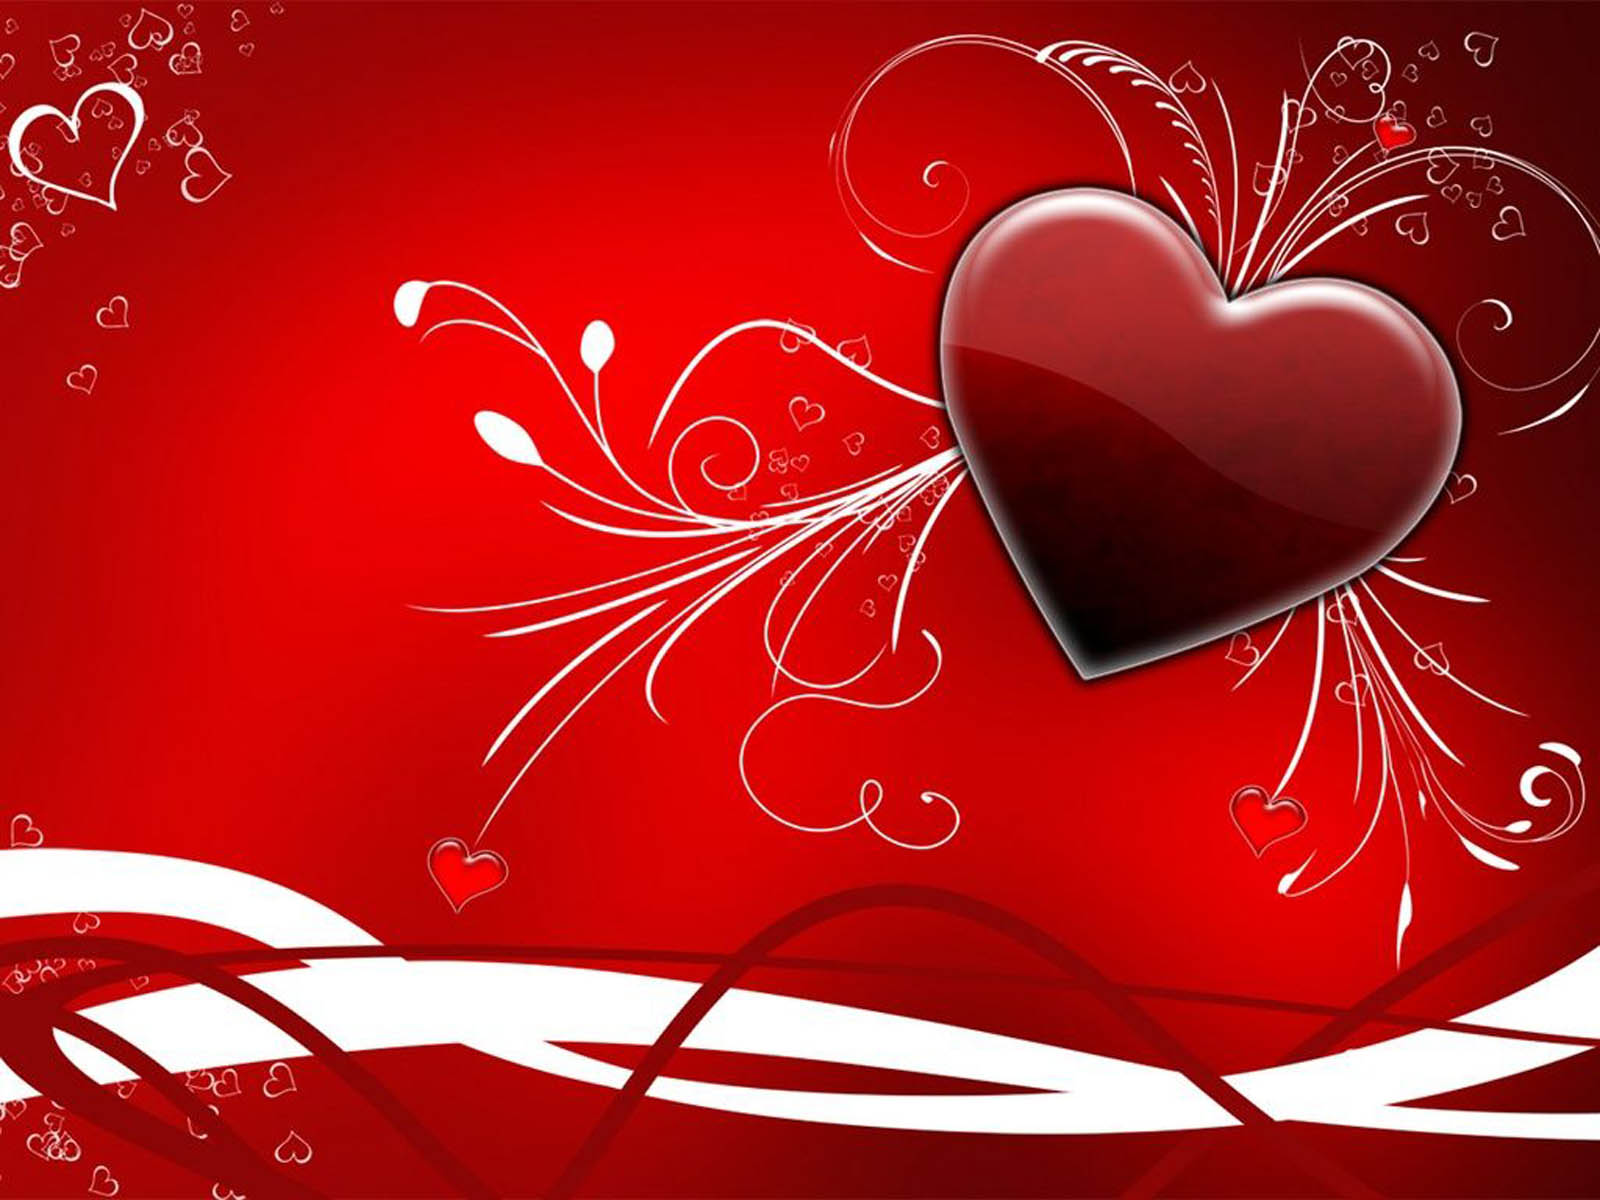 love theme wallpaper,heart,red,love,valentine's day,organ